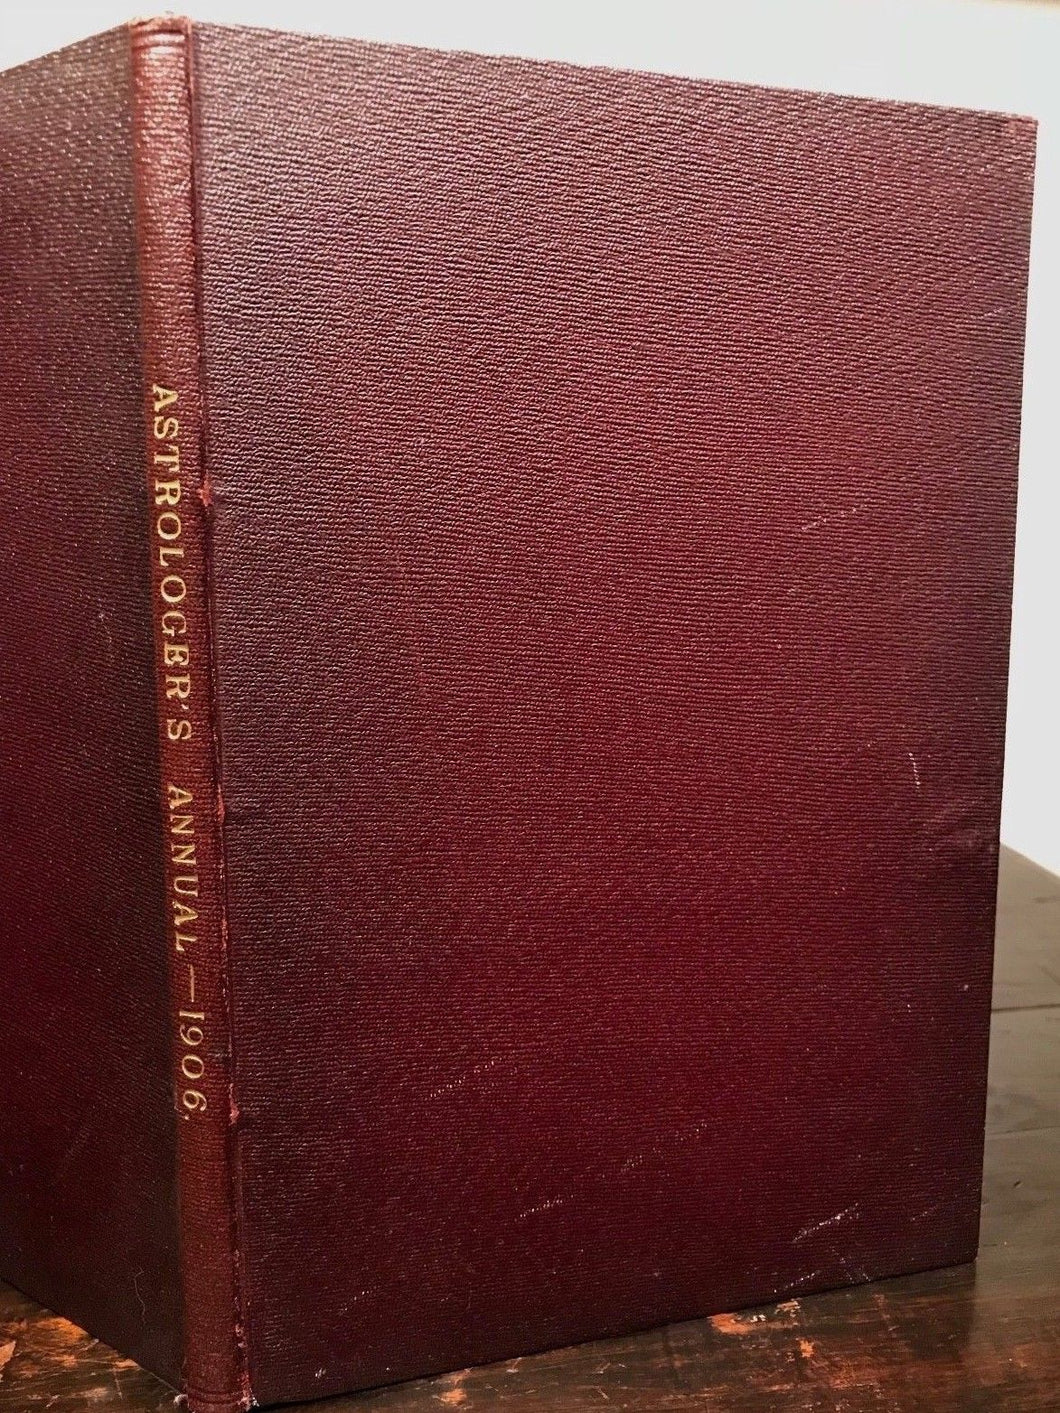 THE ASTROLOGER'S ANNUAL - Very SCARCE 1st Ed, 1906 - Alan Leo - ASTROLOGY OCCULT